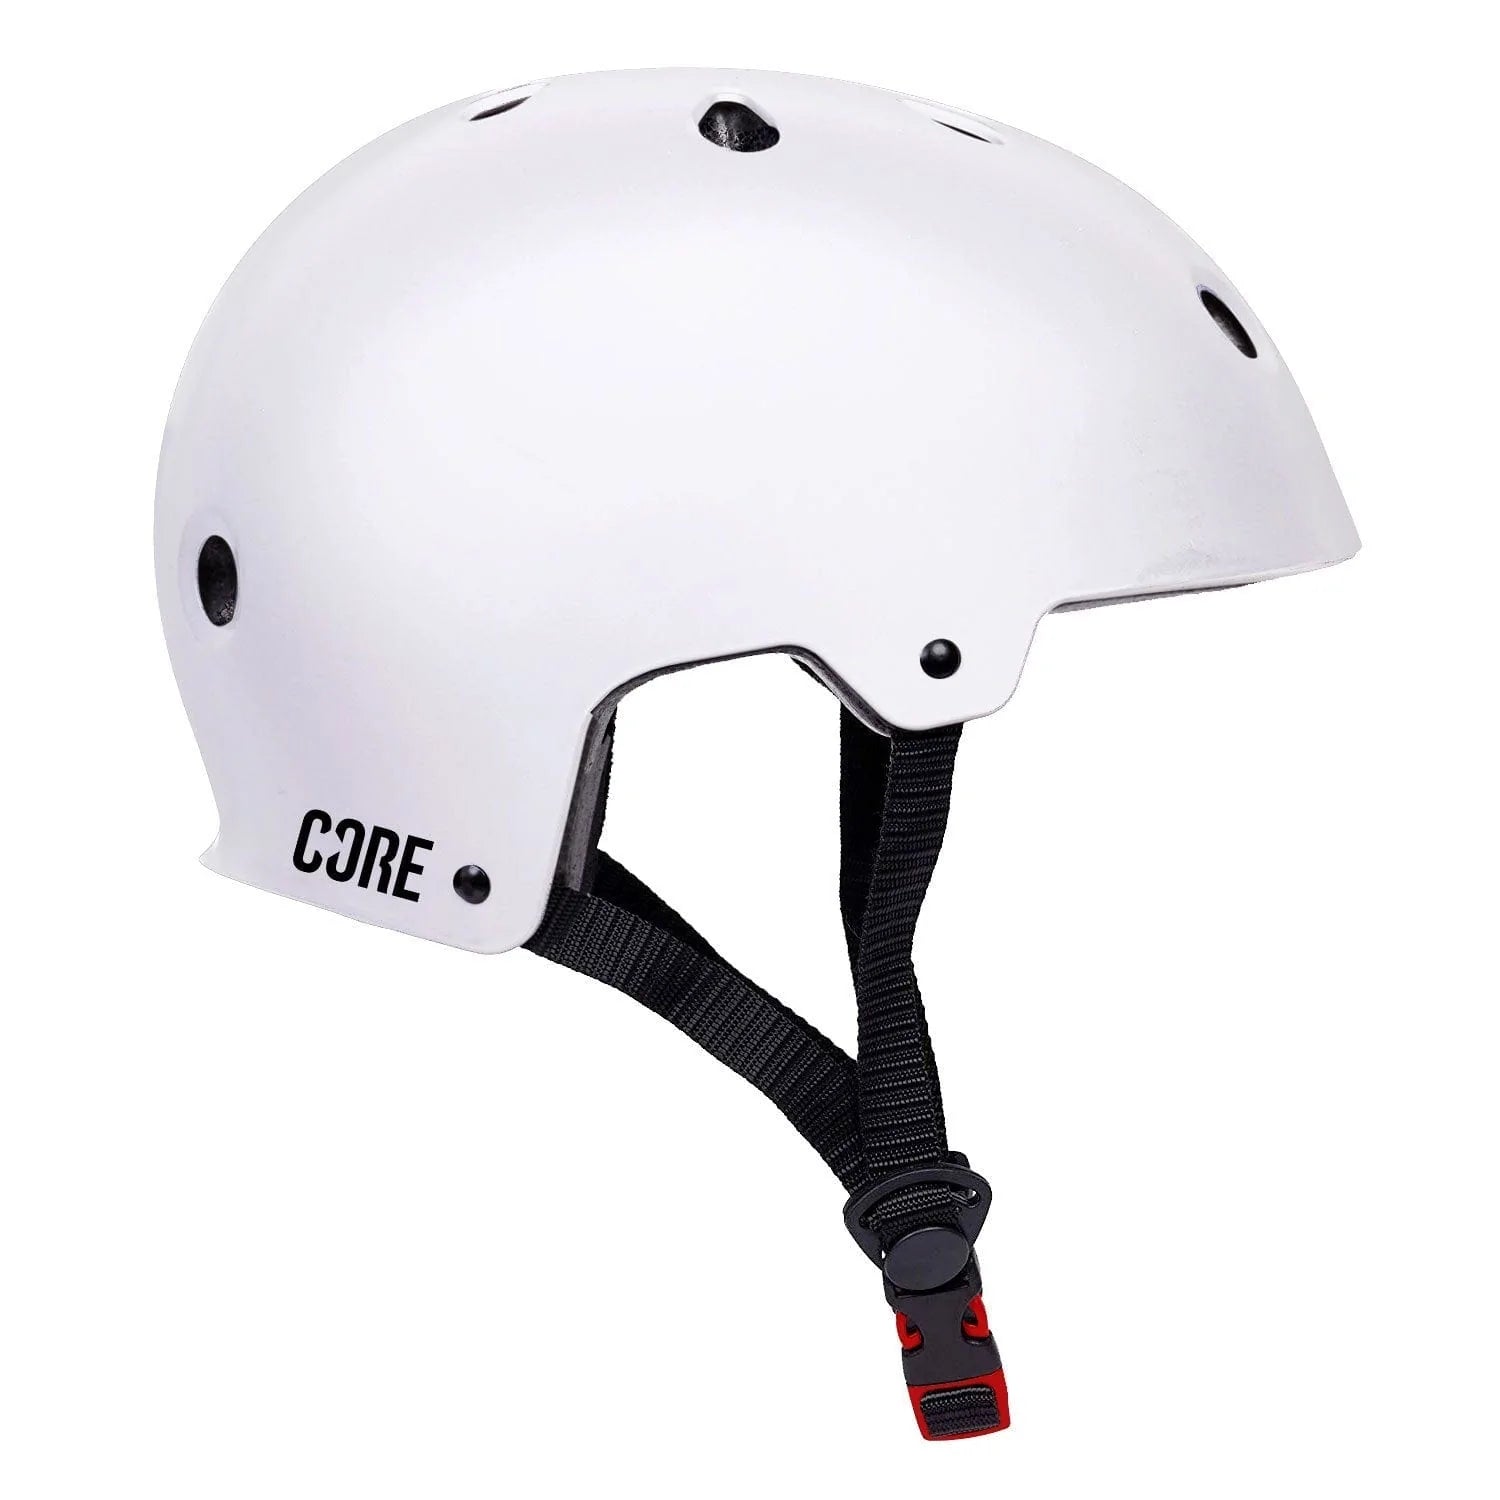 CORE Action Sports Helmet - White